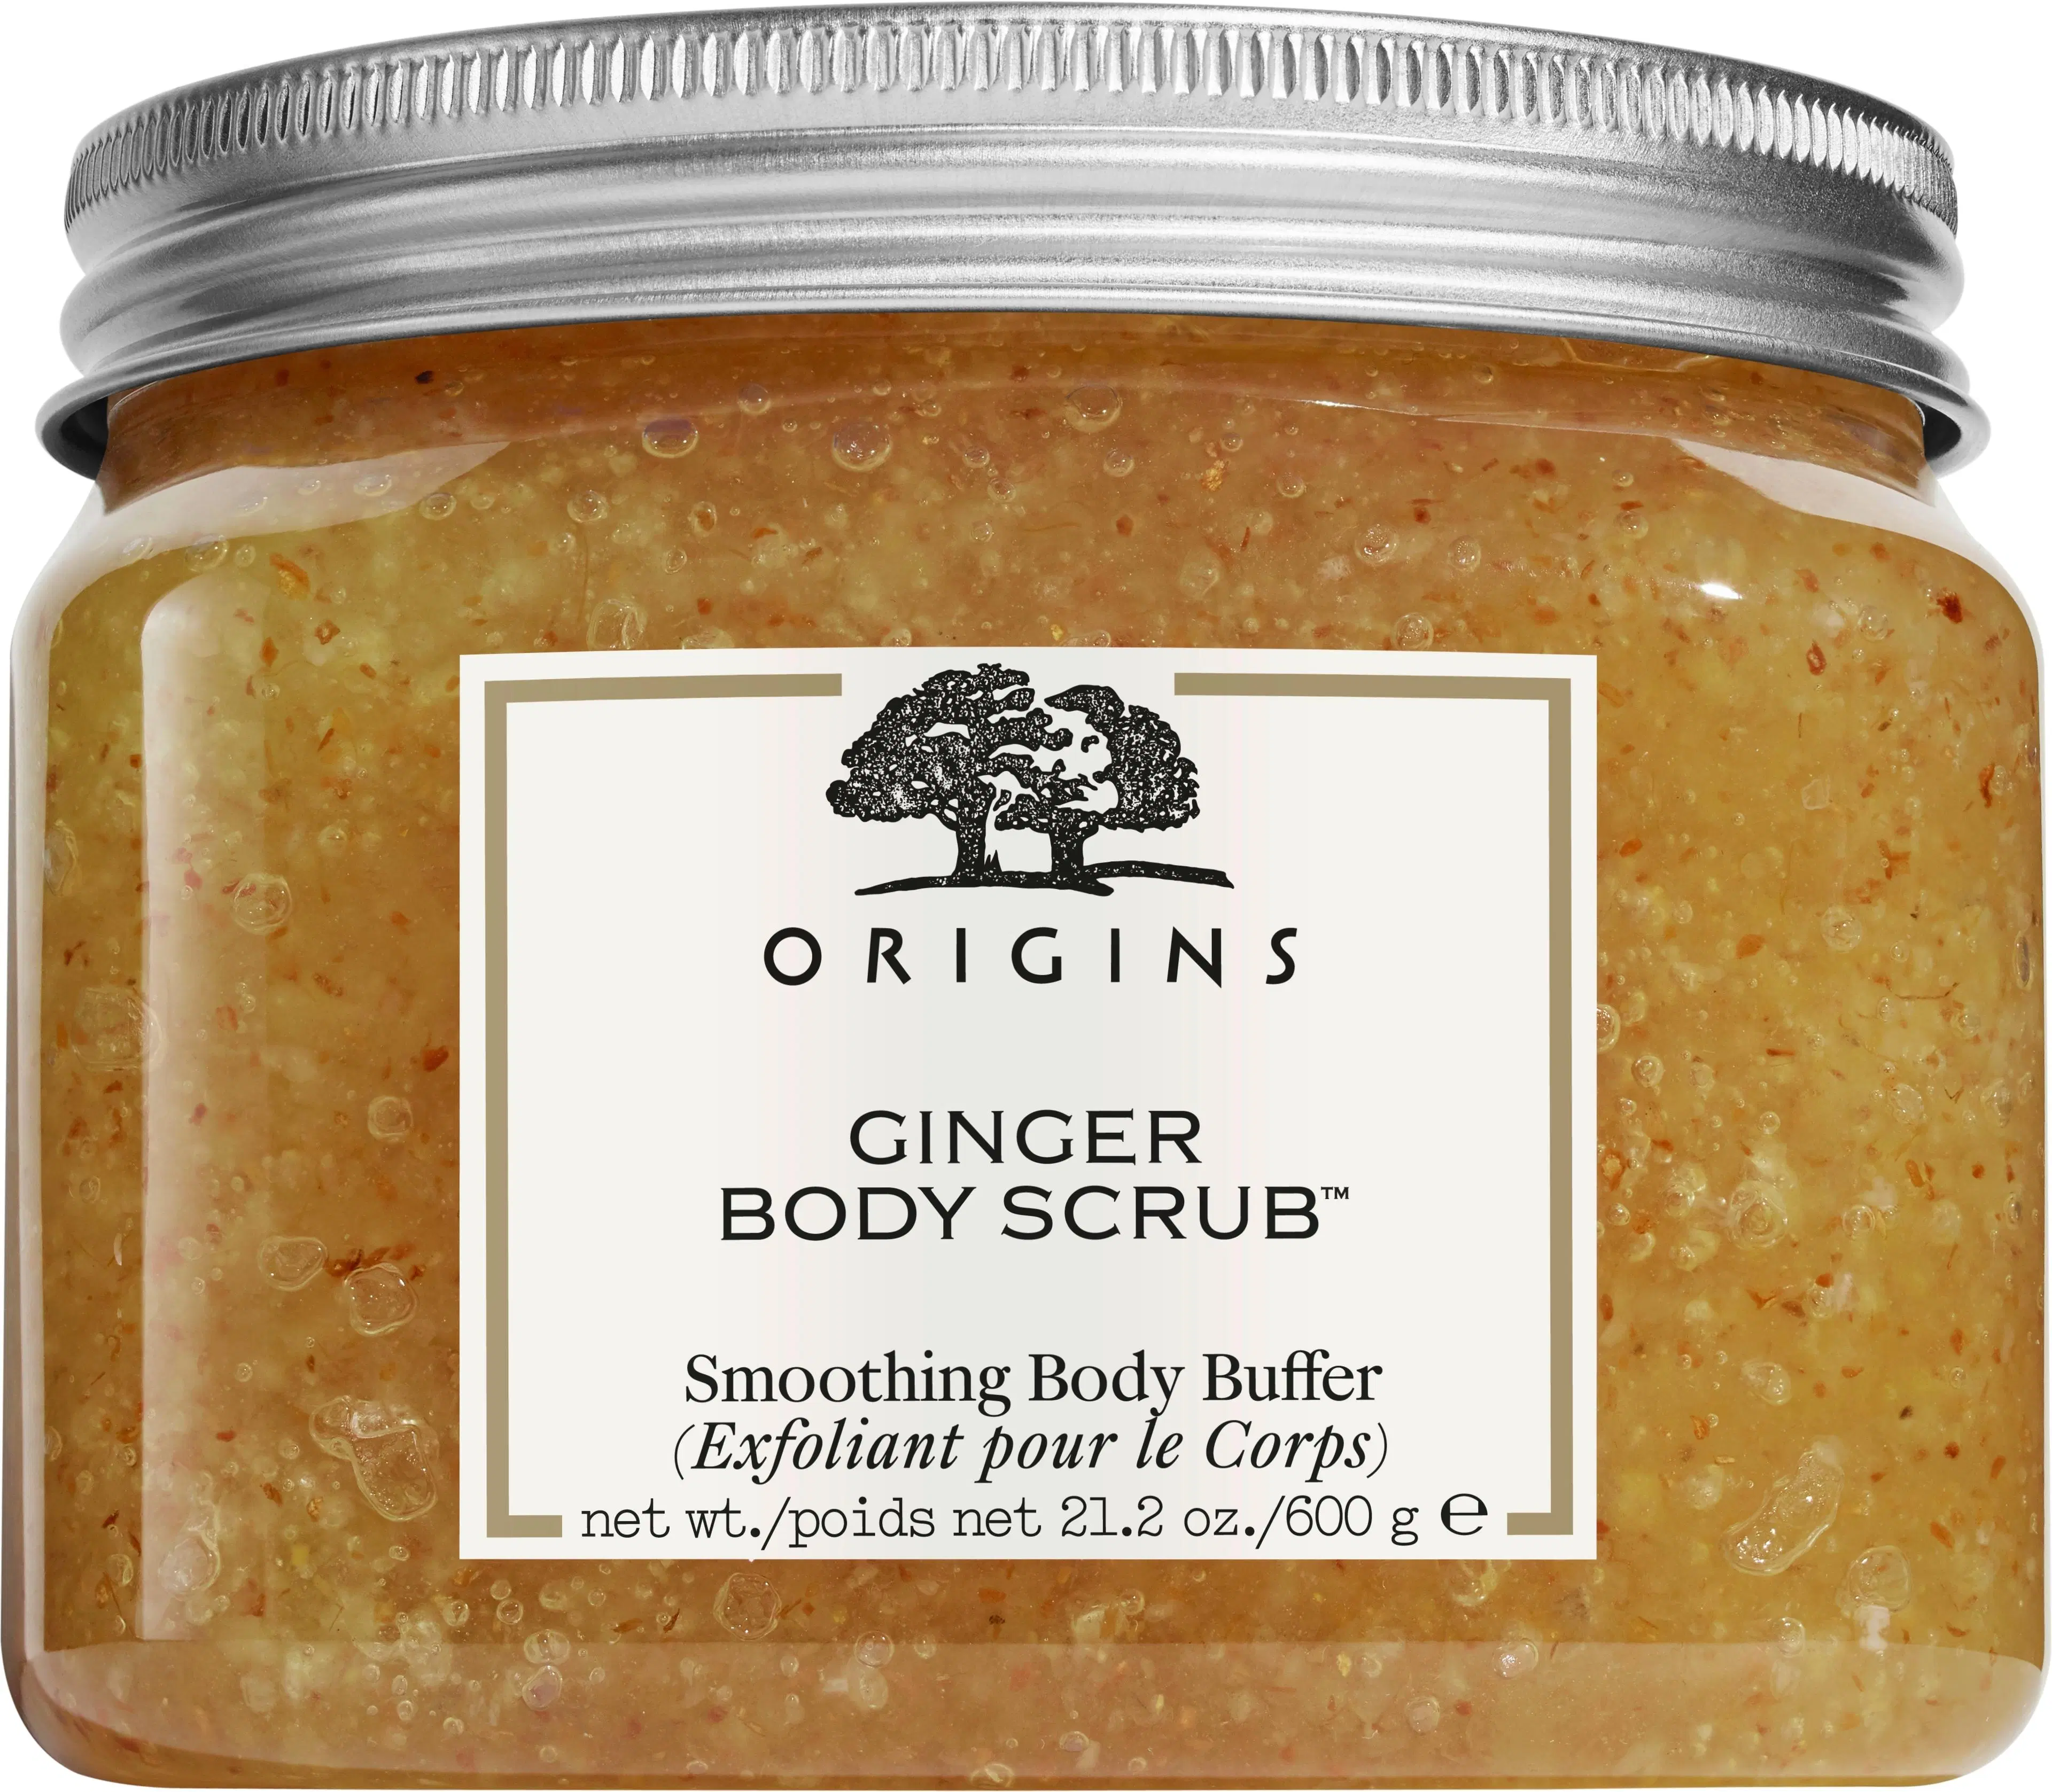 Origins Ginger Body Scrub™ Smoothing Body Buffer vartalokuorinta 600g